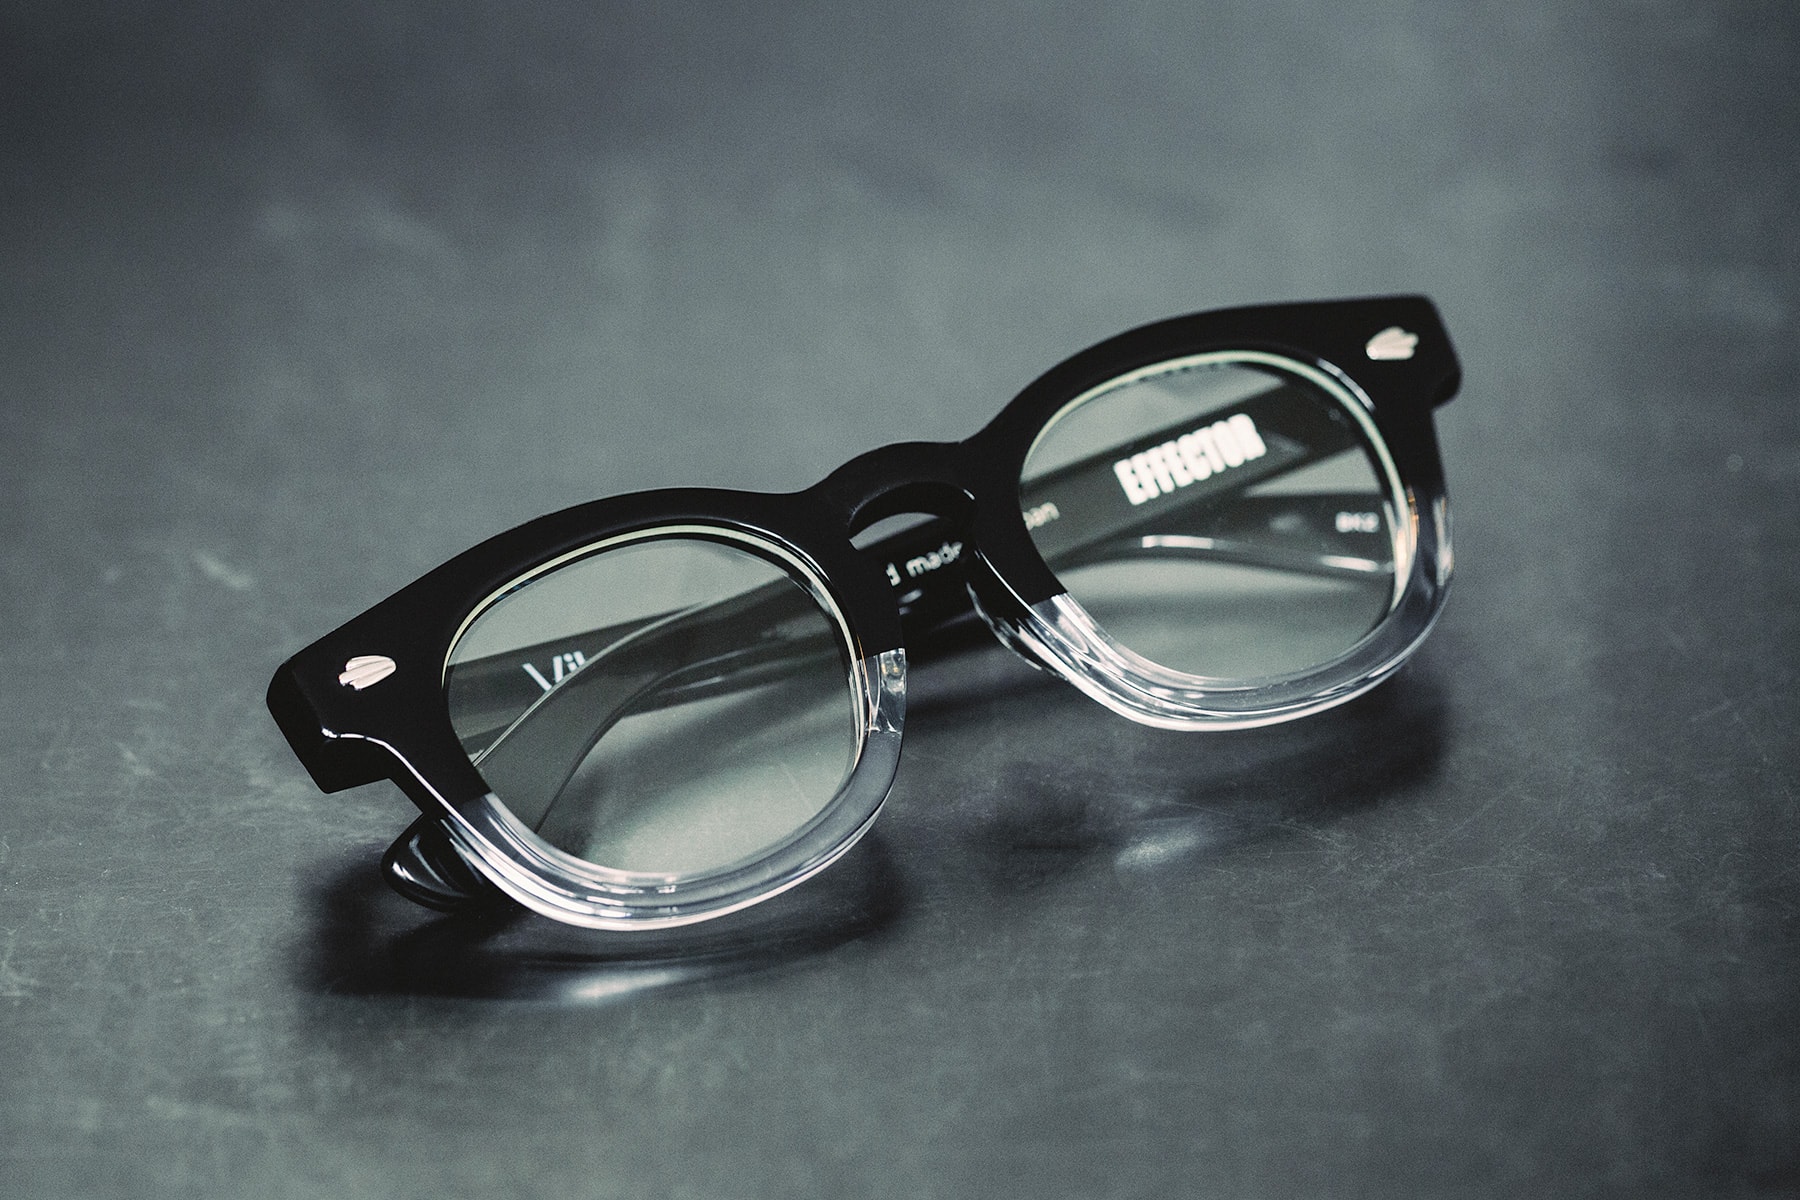 EFFECTOR x BOSS 40 周年紀念眼鏡新作